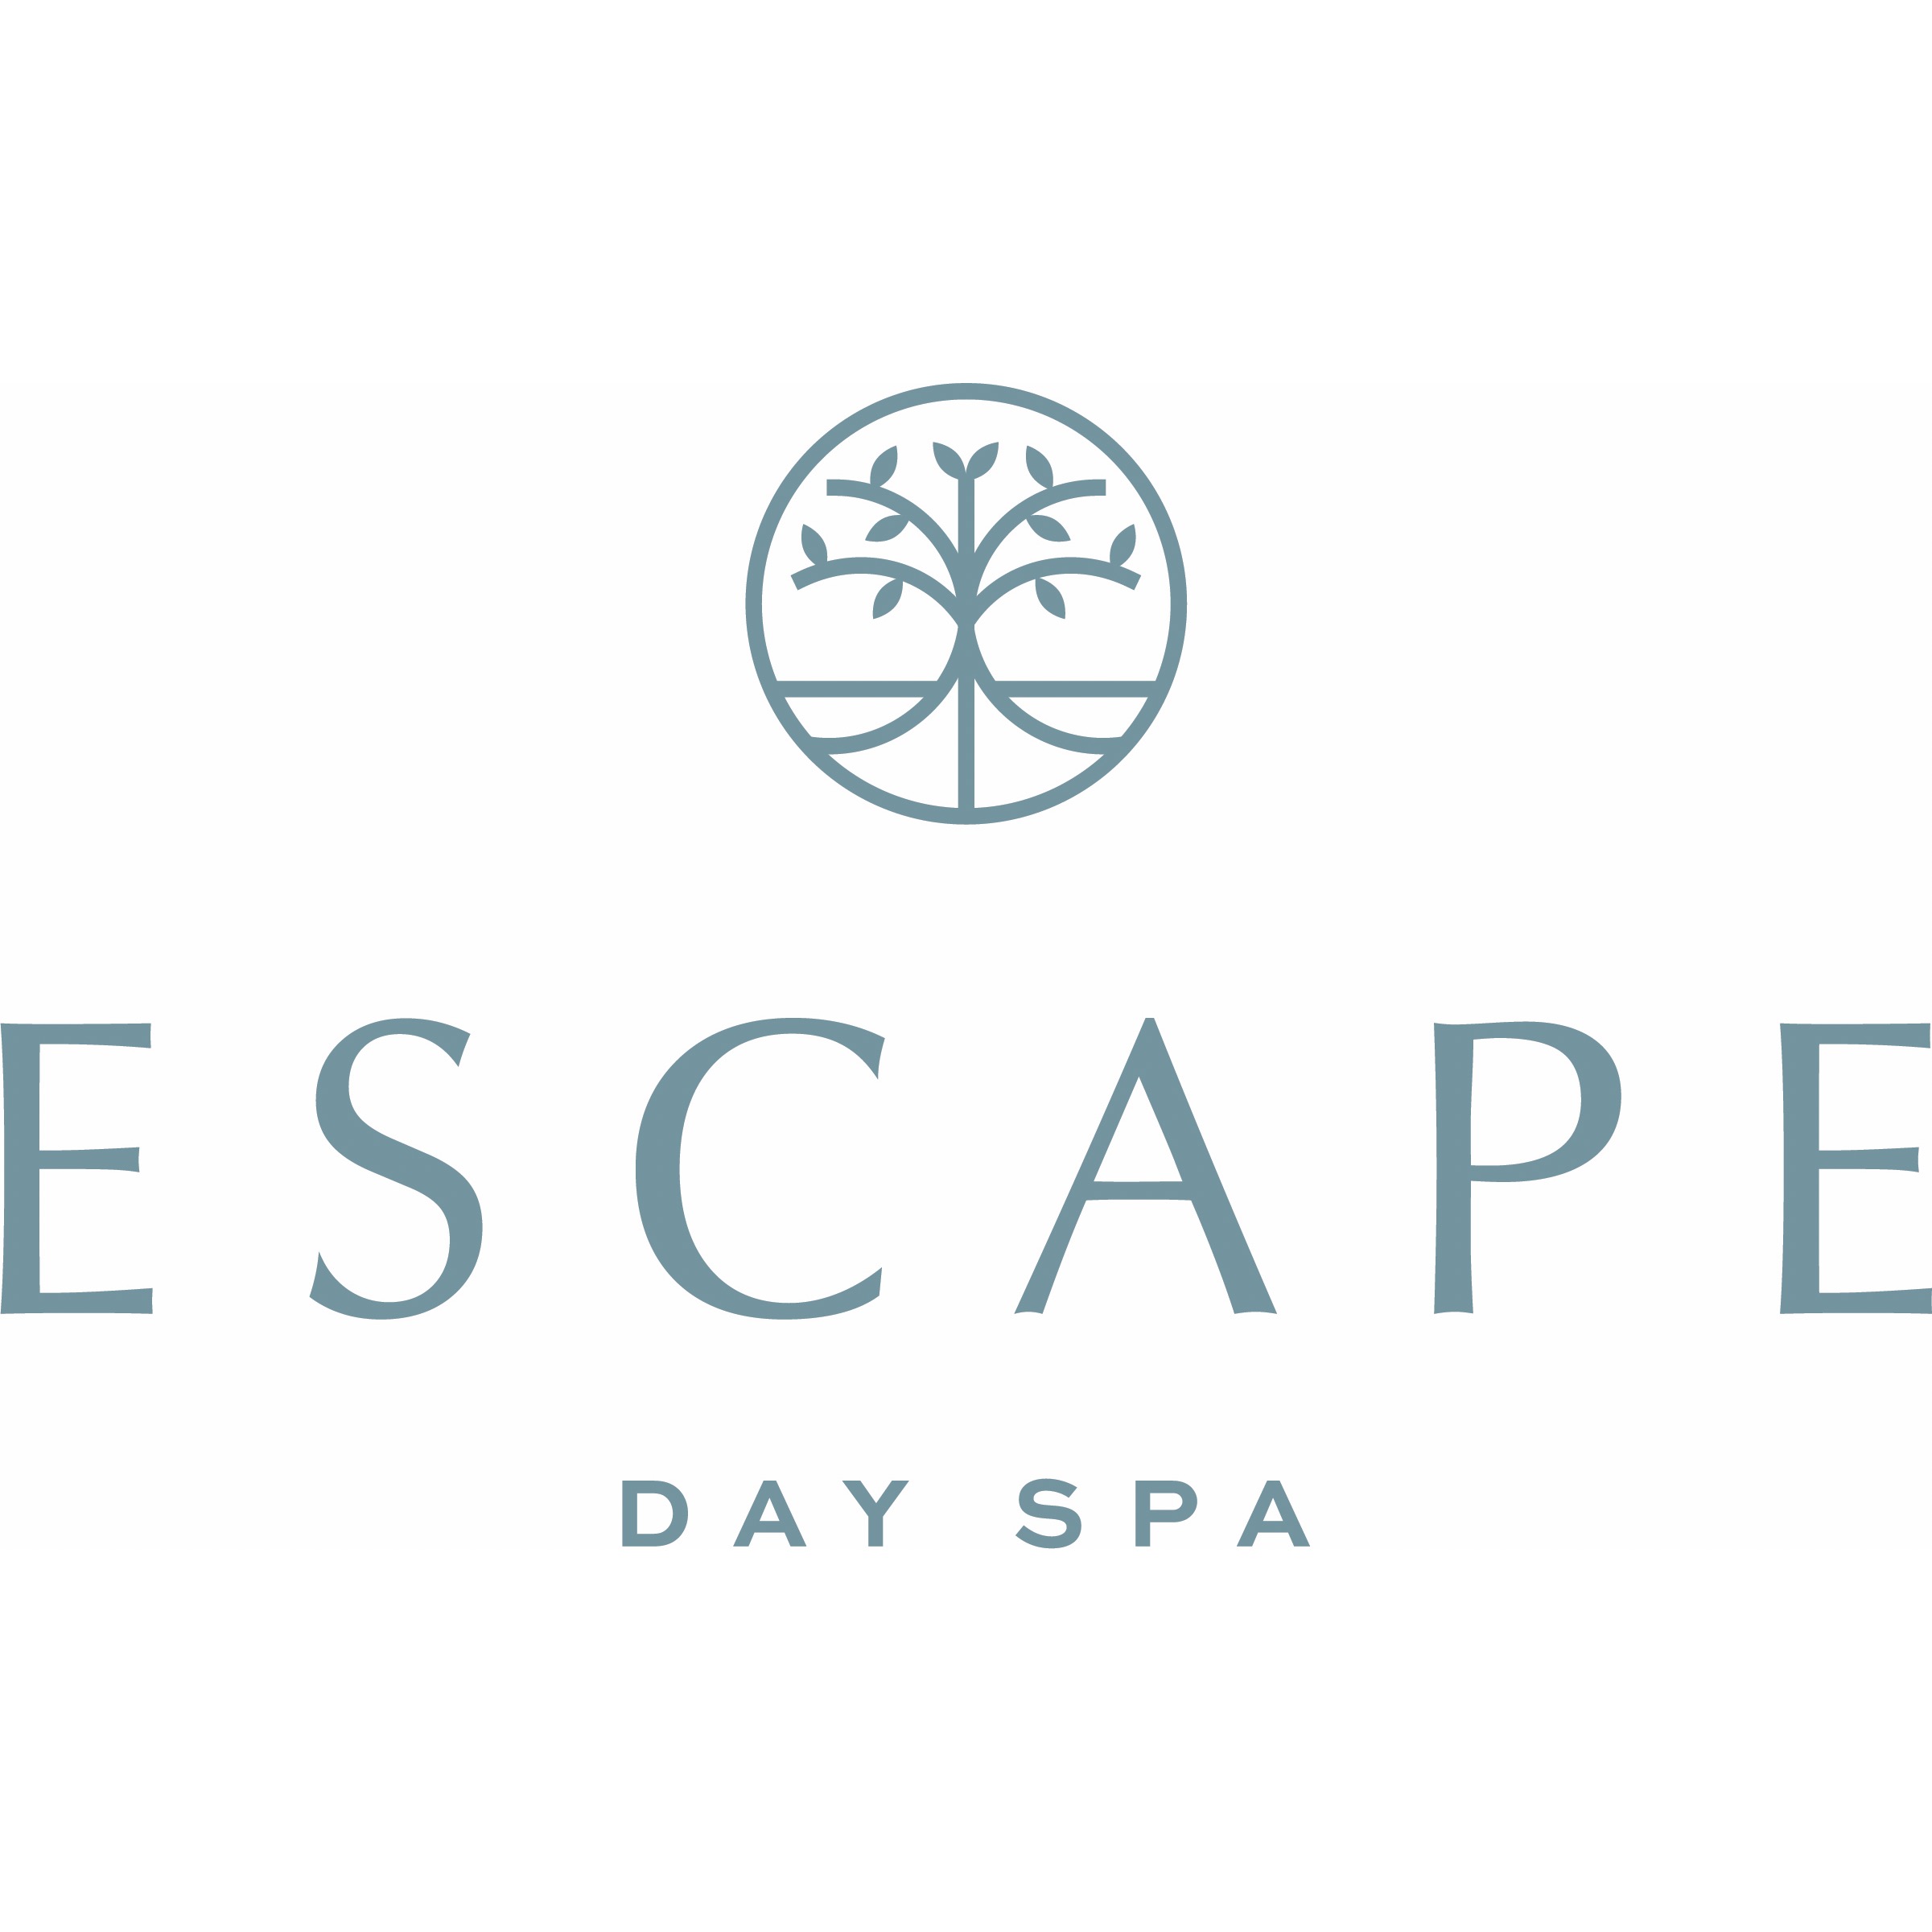 Escape Day Spa - Birmingham, AL 35209 - (205)414-6062 | ShowMeLocal.com